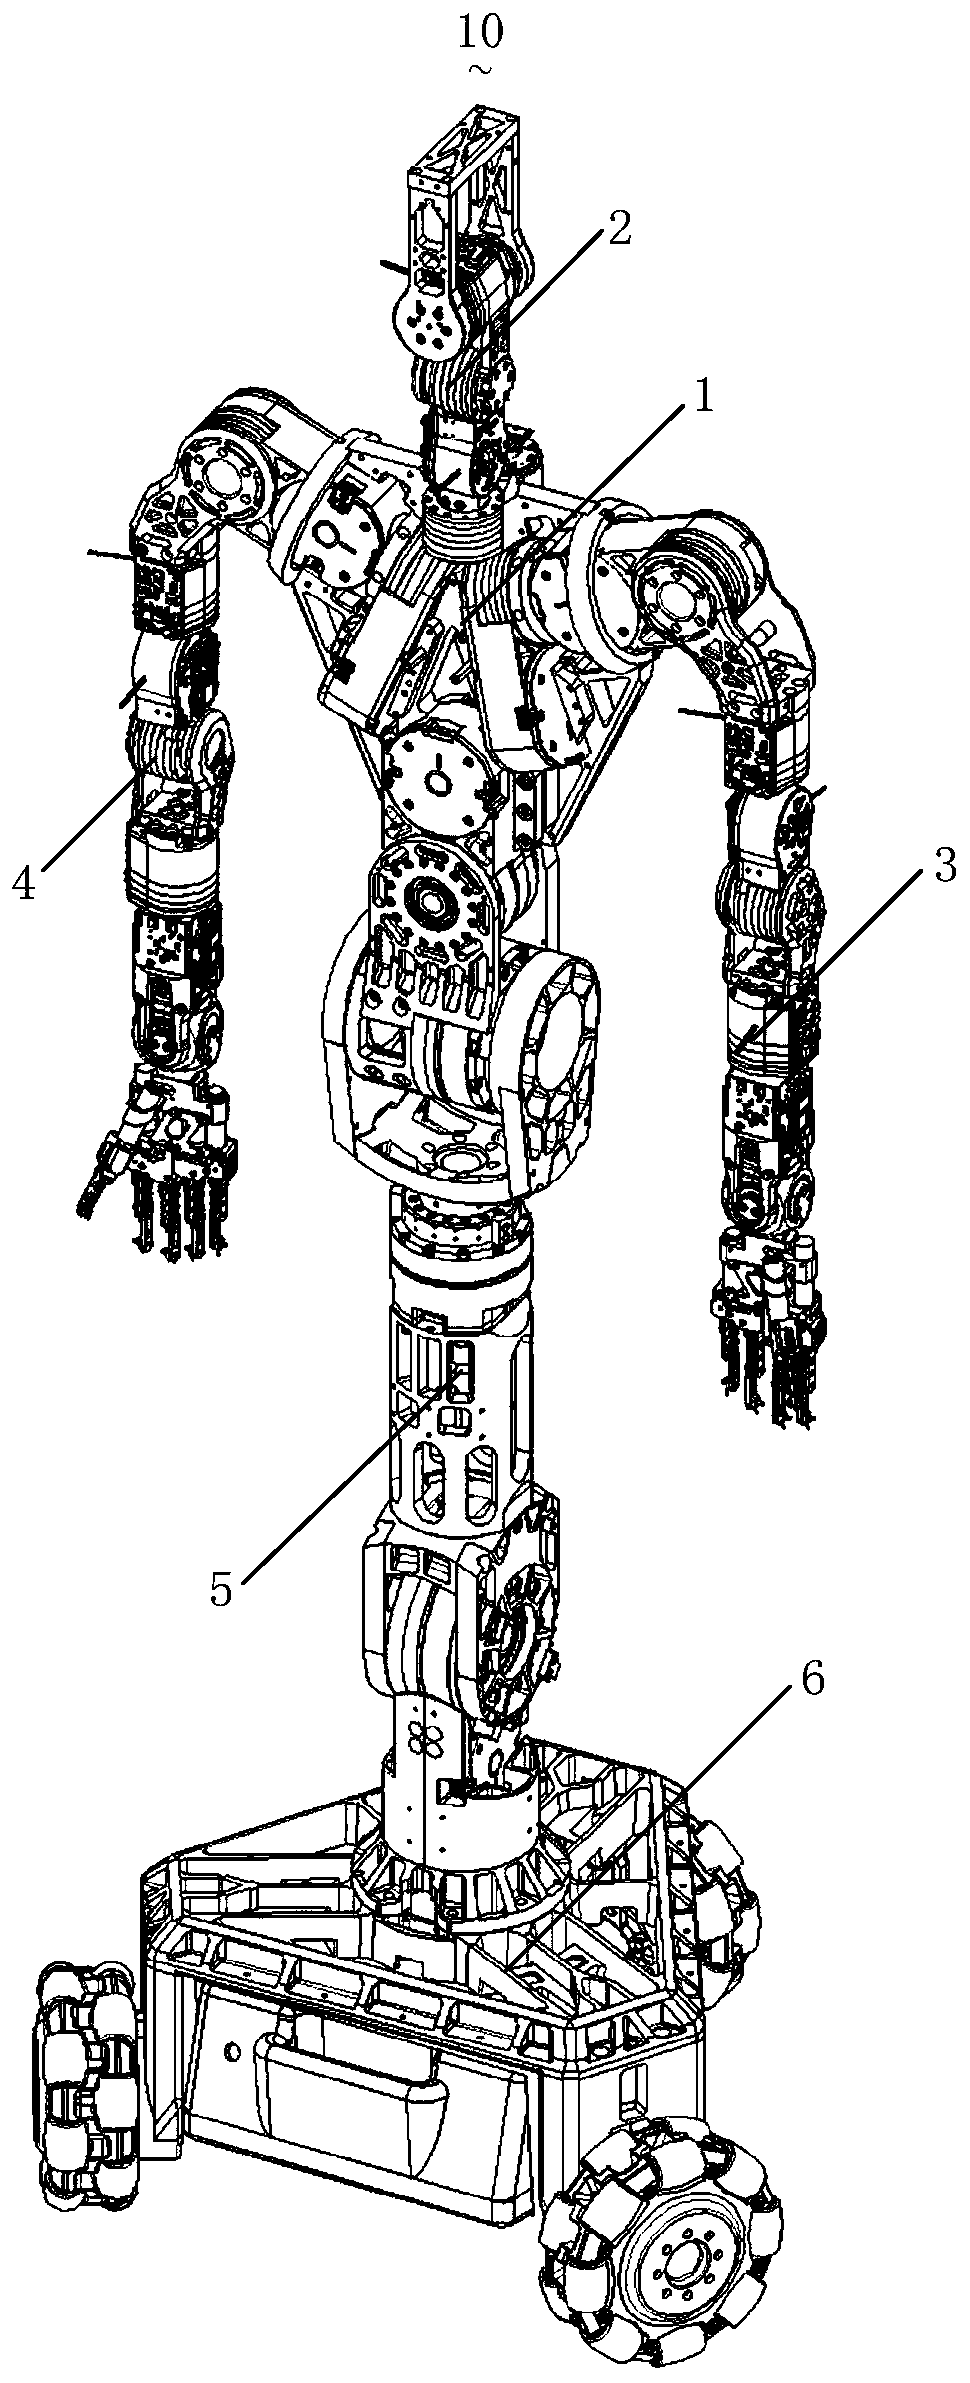 Robot internal skeleton and robot